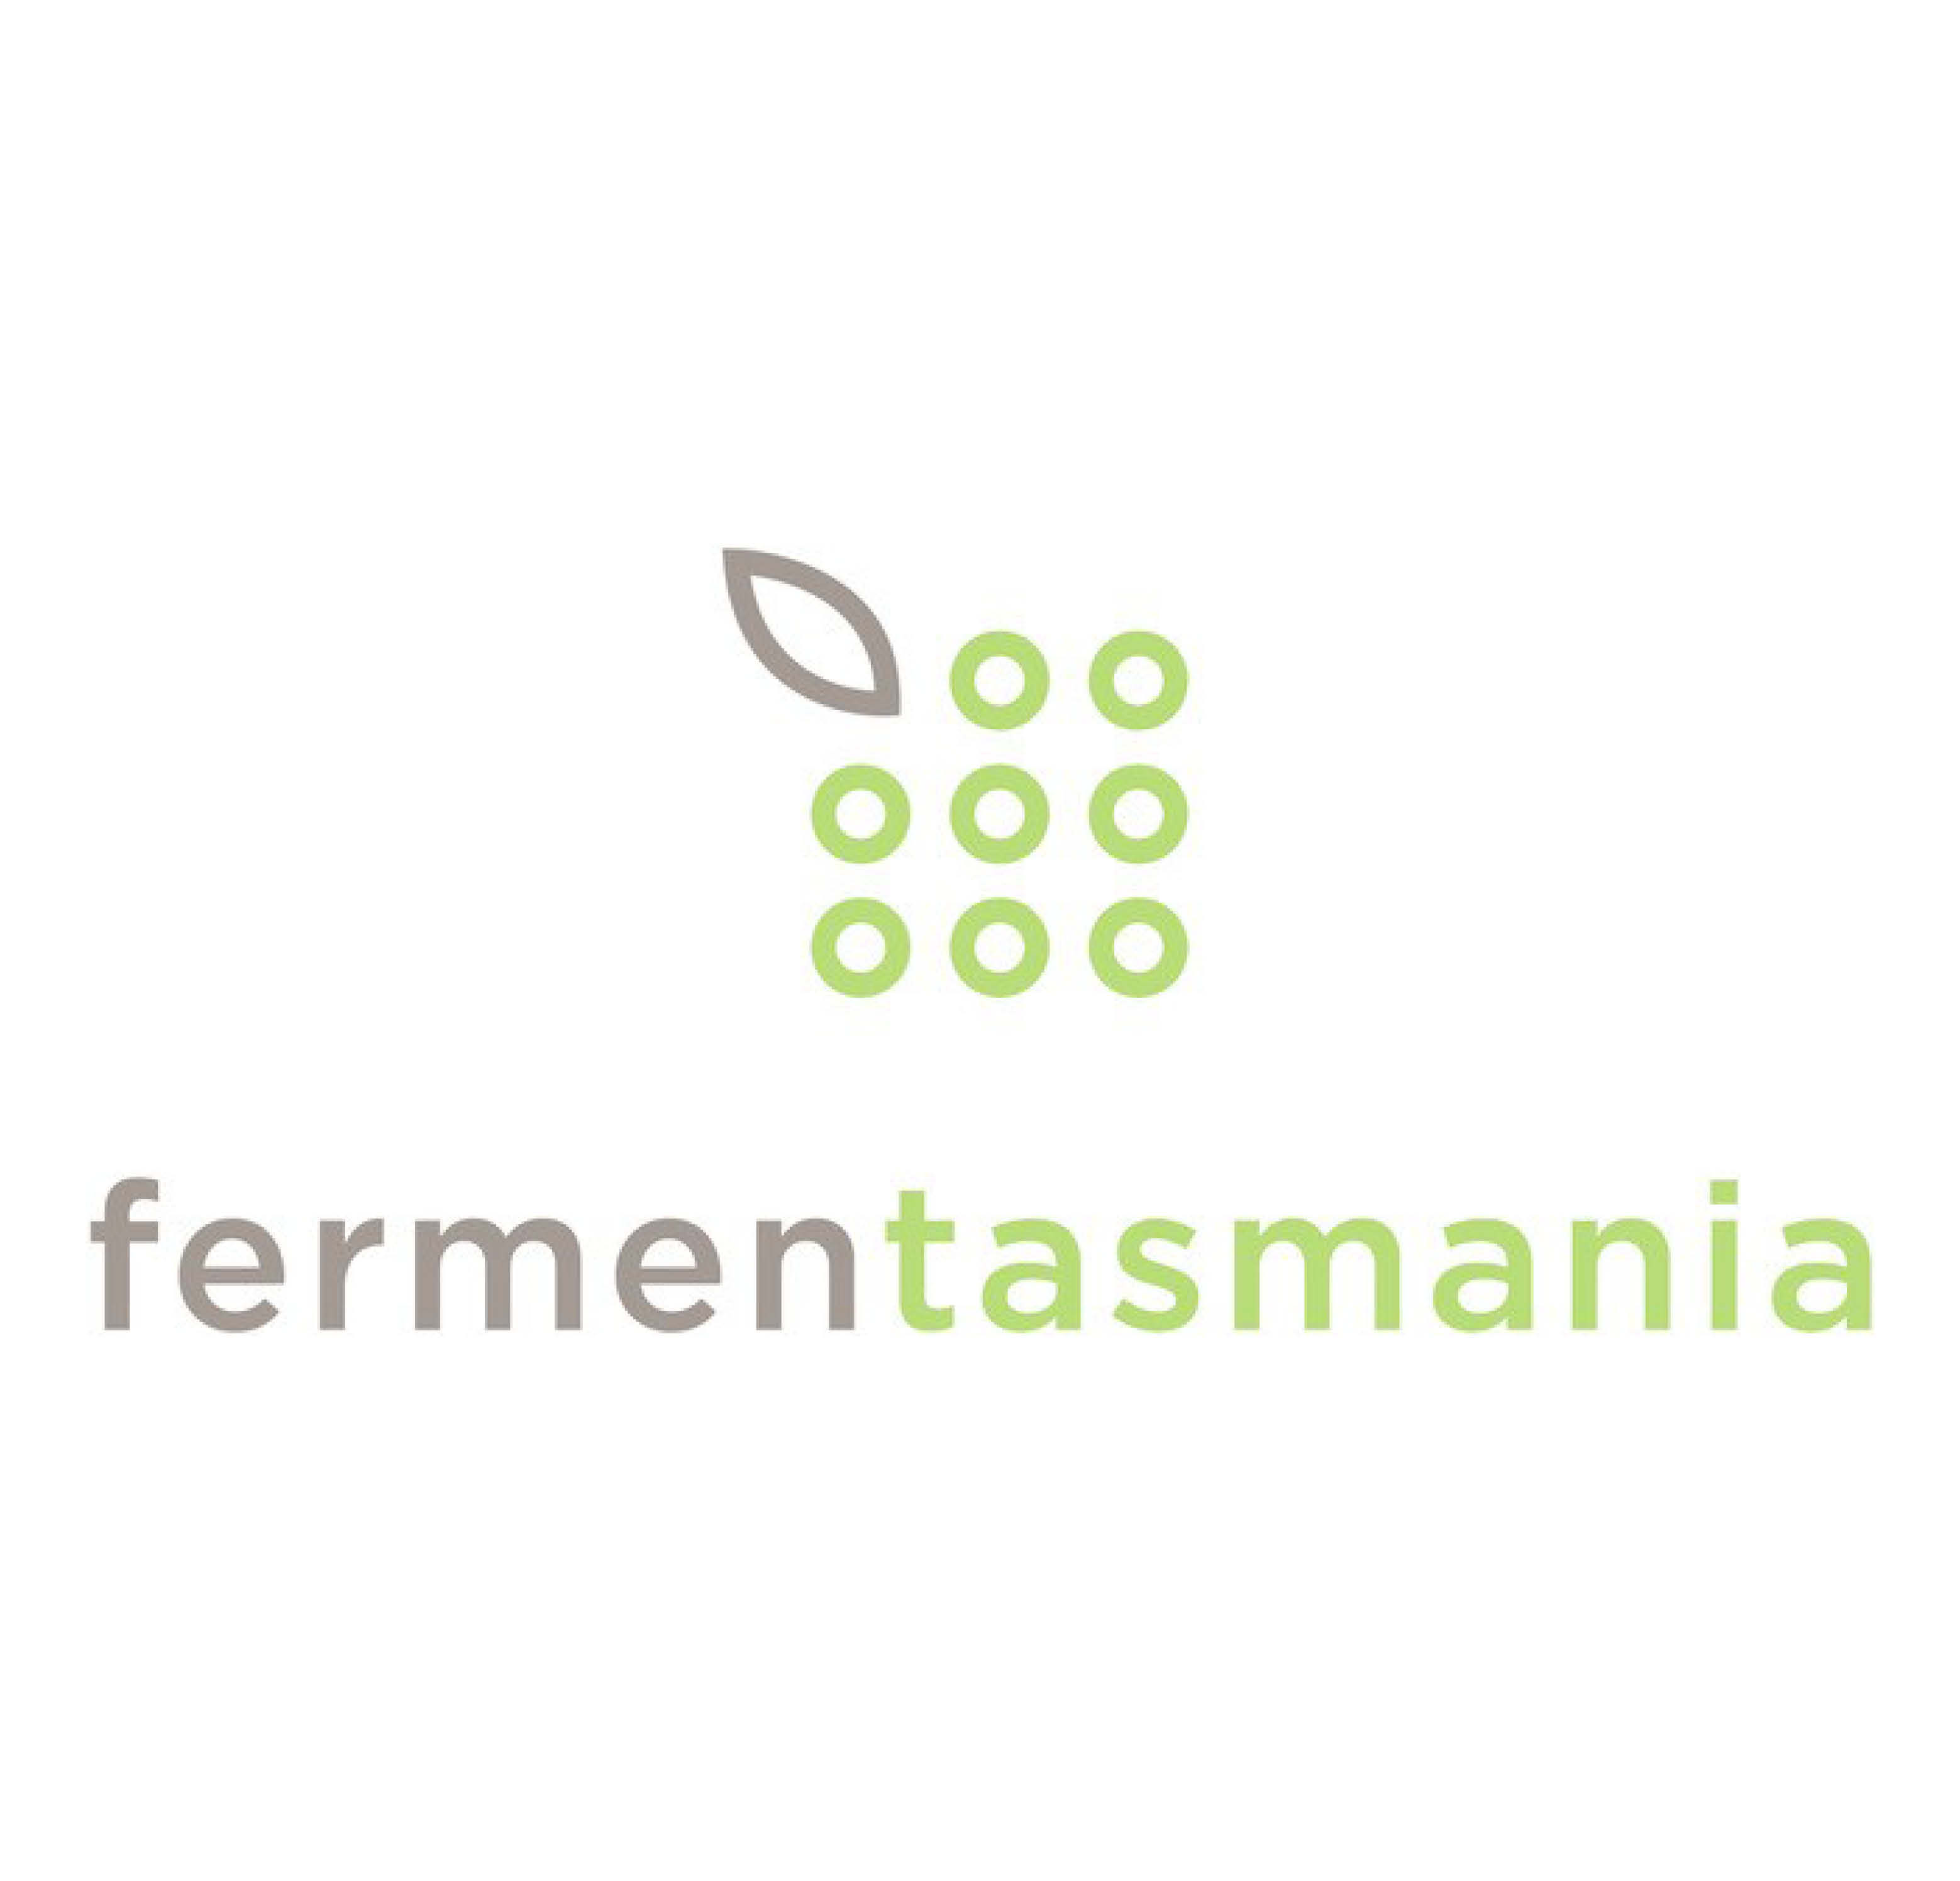 FermenTasmania logo